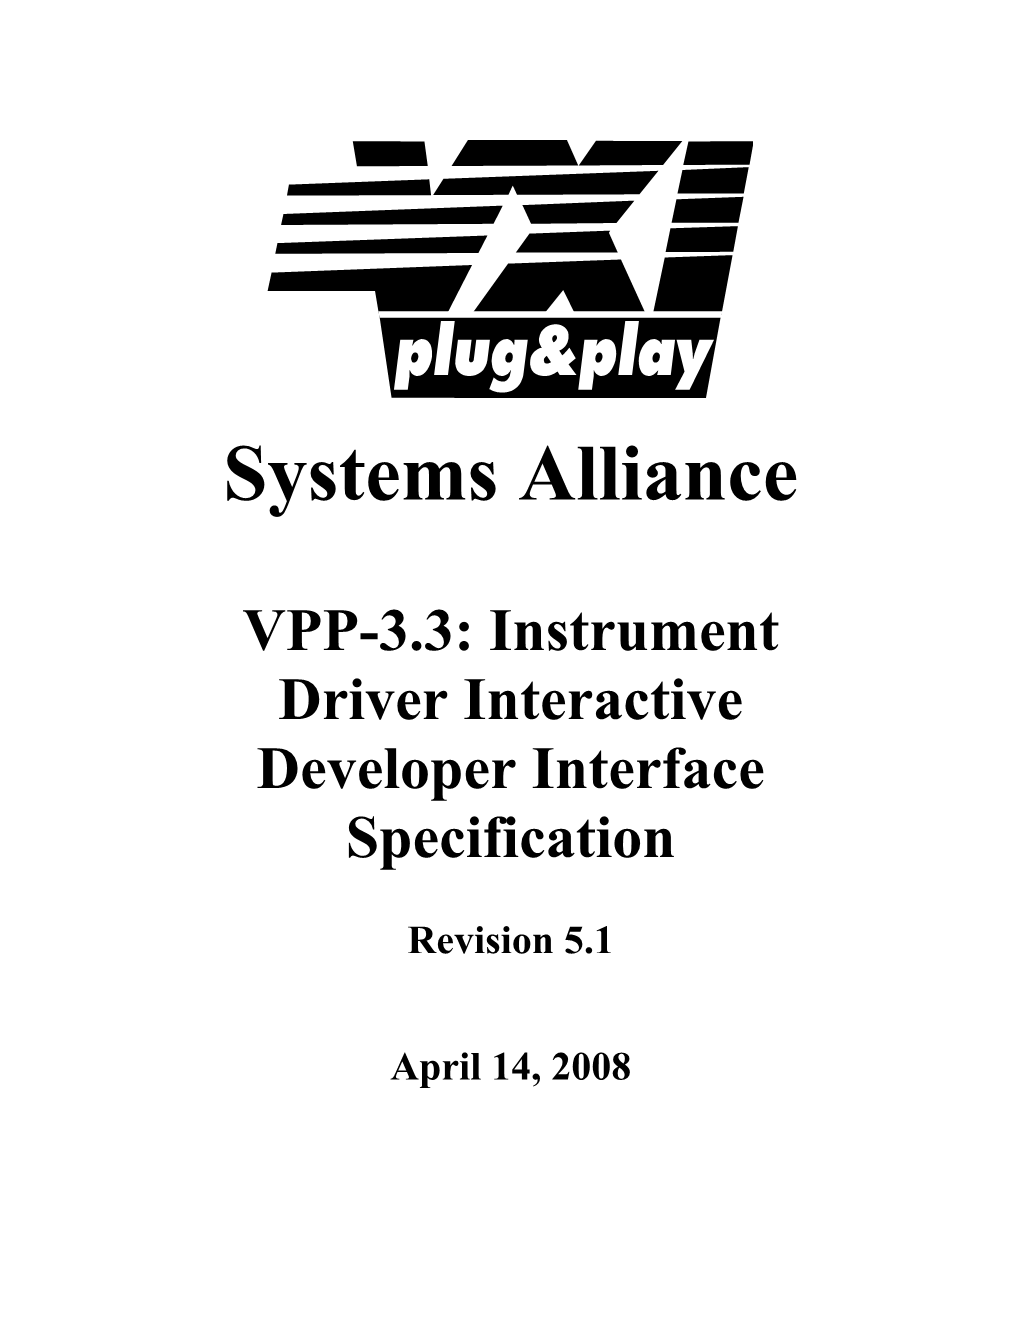 VPP-3.3: Instrument Driver Interactive Developer Interface Specification